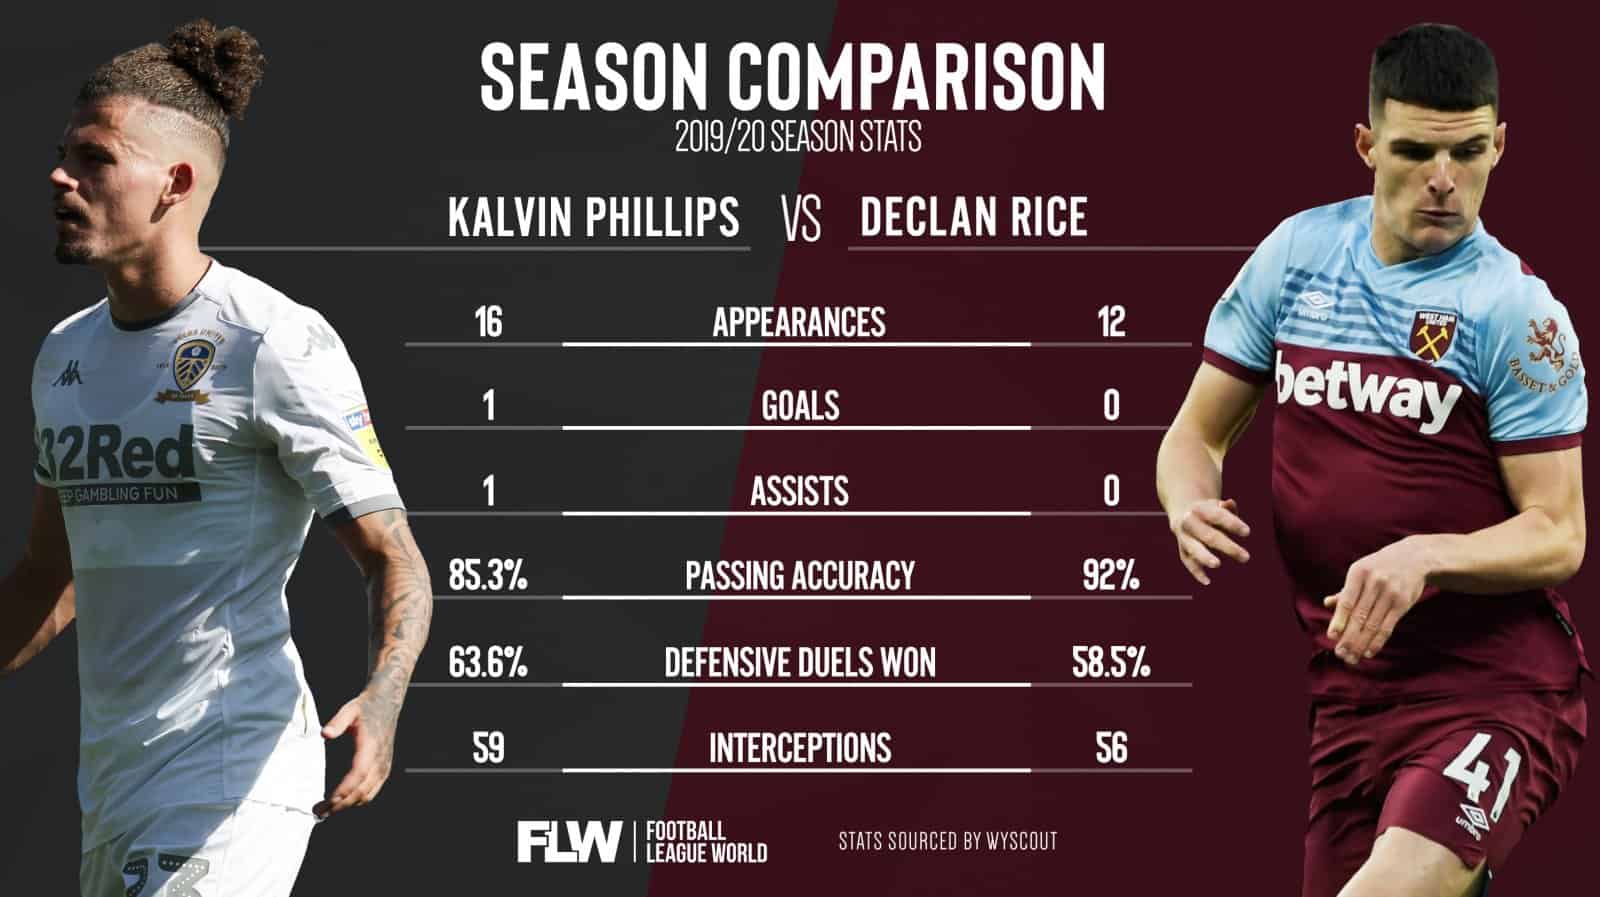 Declan Rice Vs. Kalvin Phillips Comparison (Source Football League World)